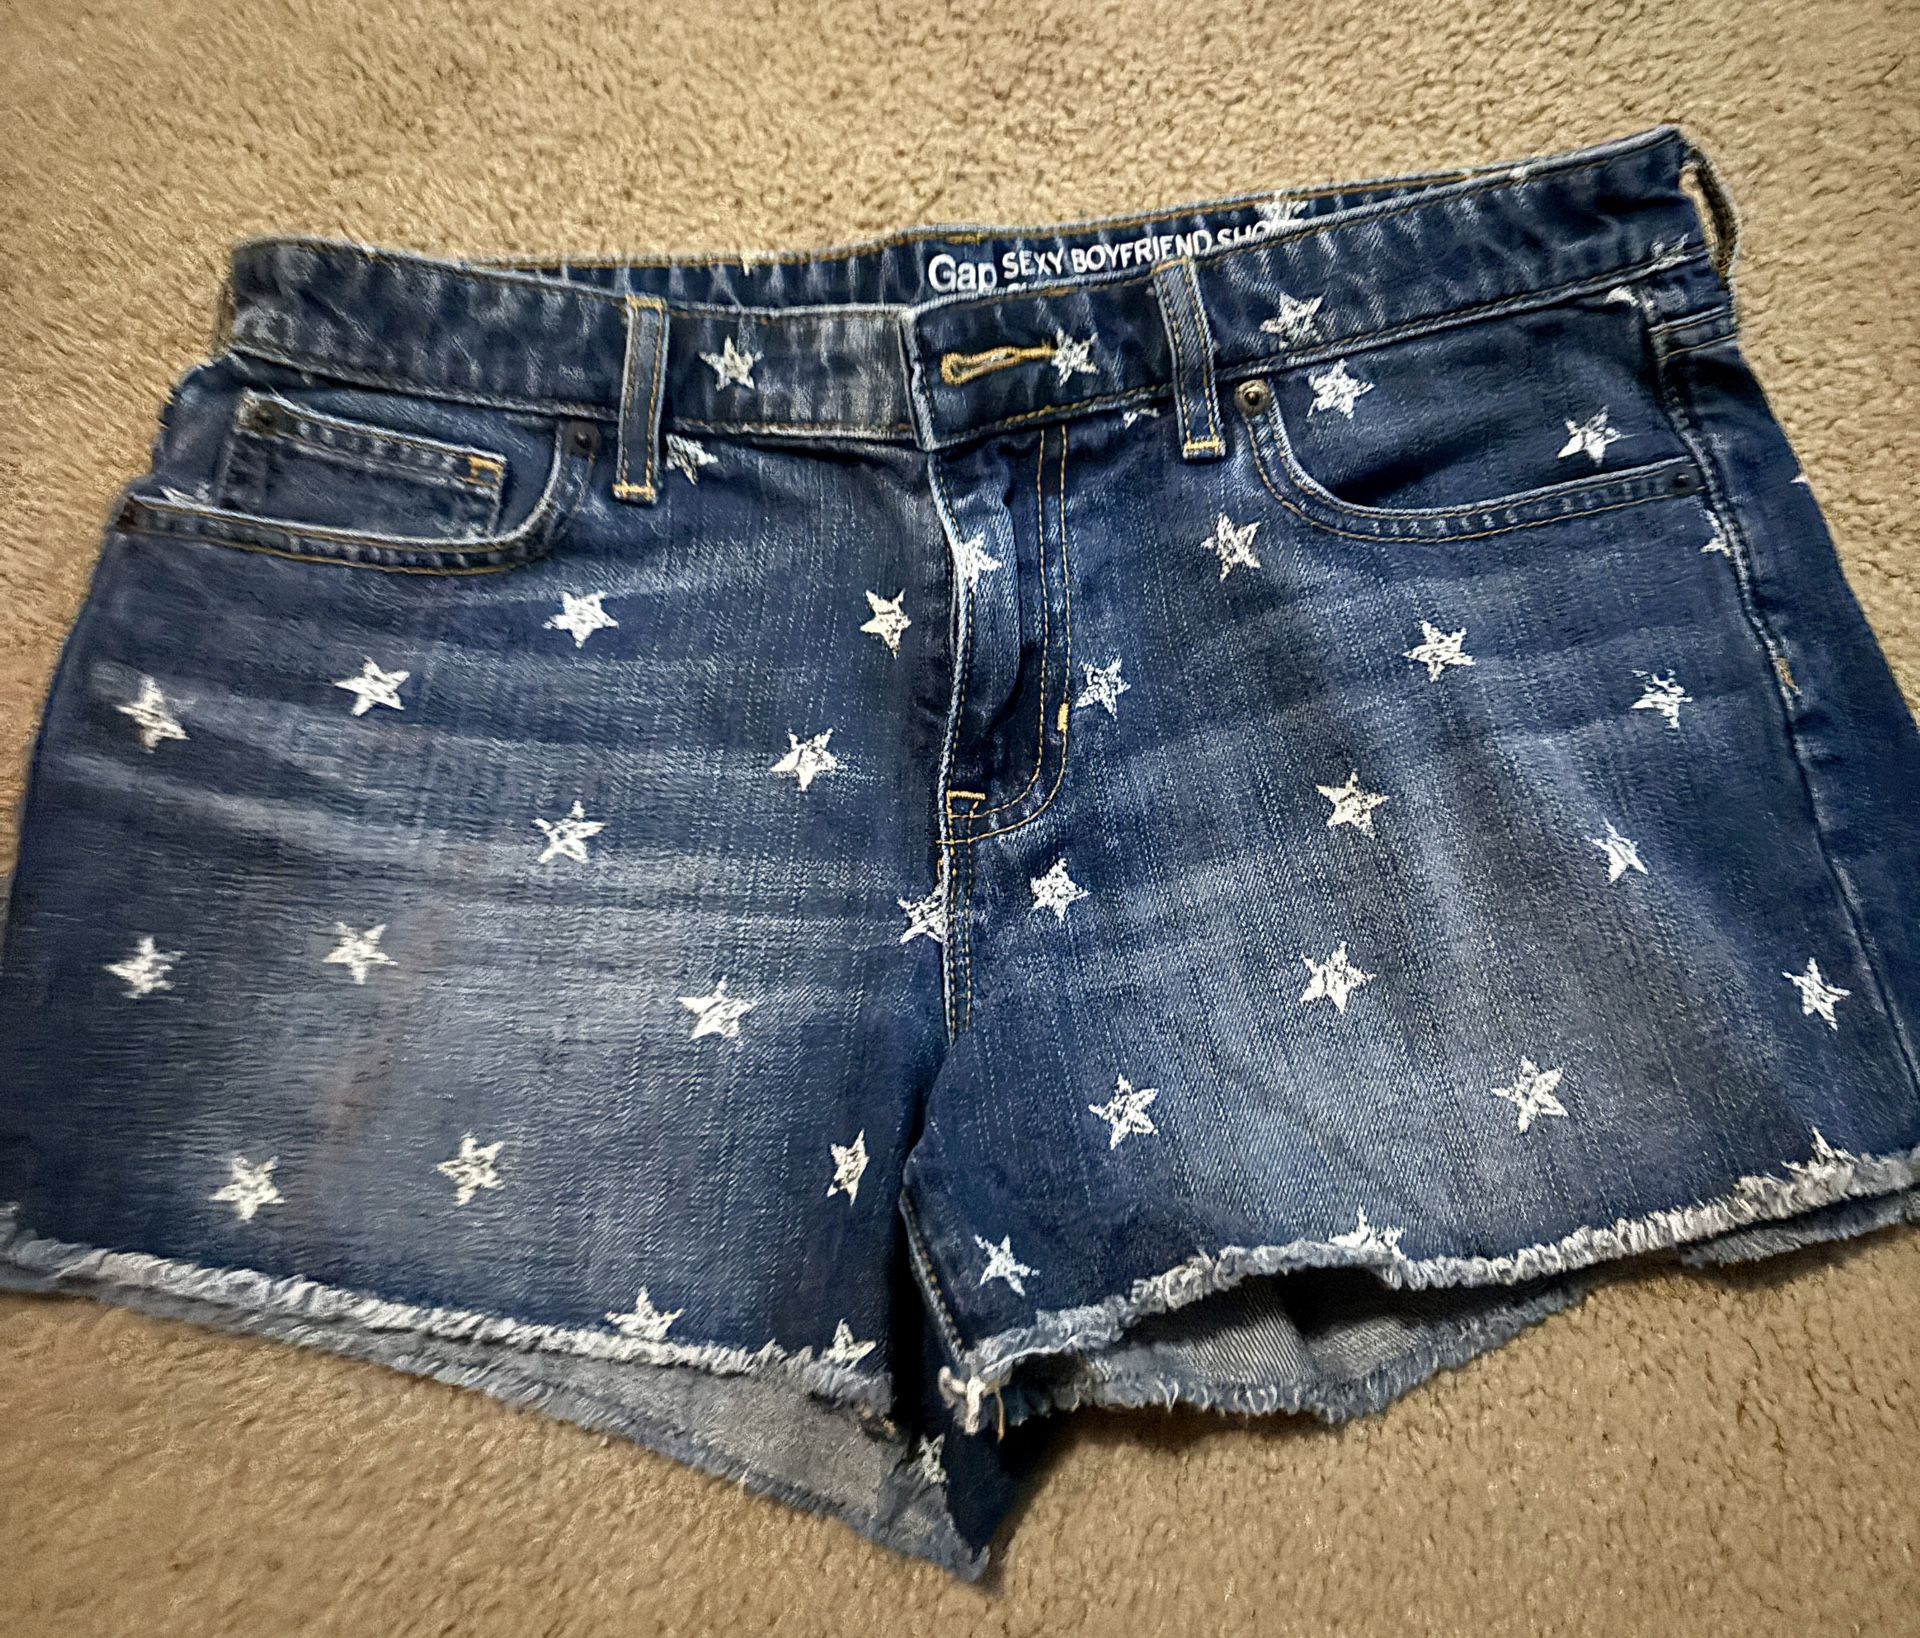 Gap Brand Shorts, Size 6